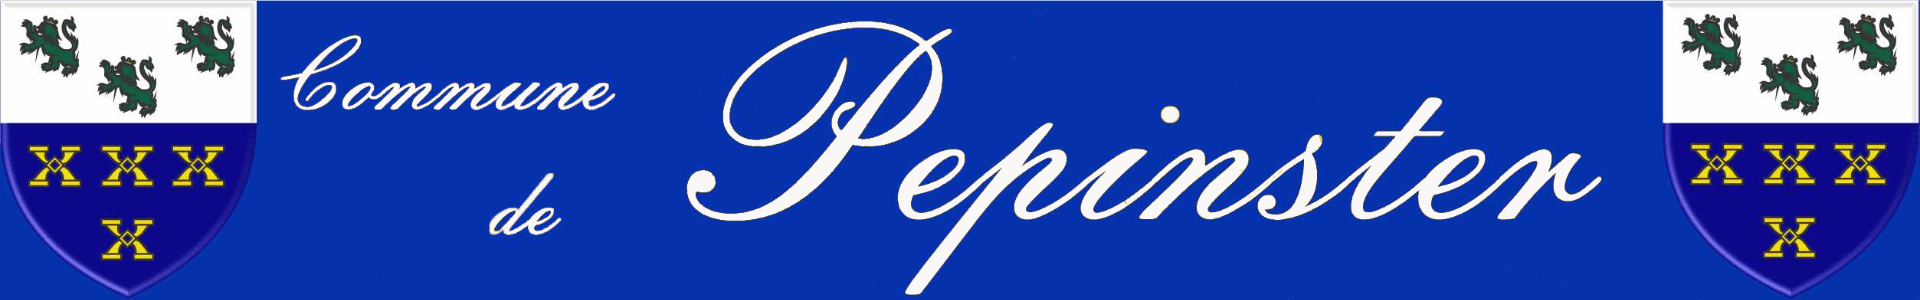 pepinster-logo.png